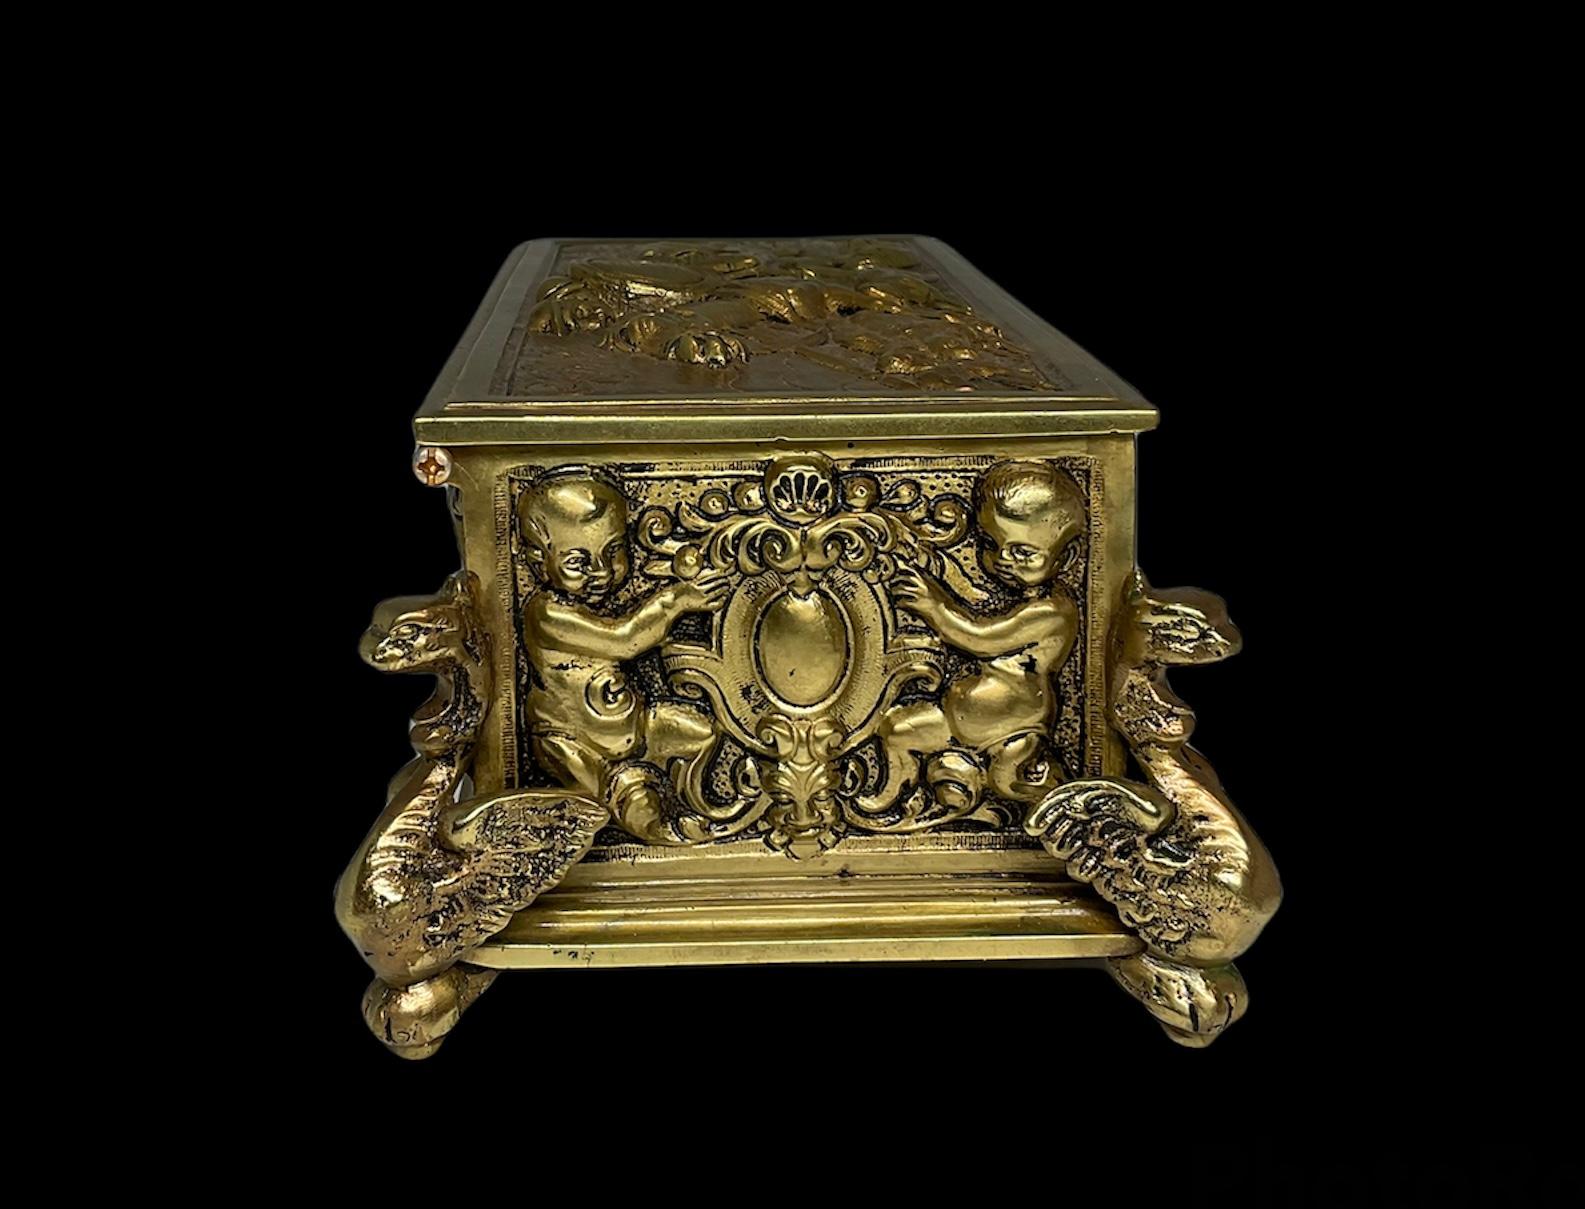 Baroque Gilt Heavy Bronze Repousse Rectangular Jewelry/Decorative Box For Sale